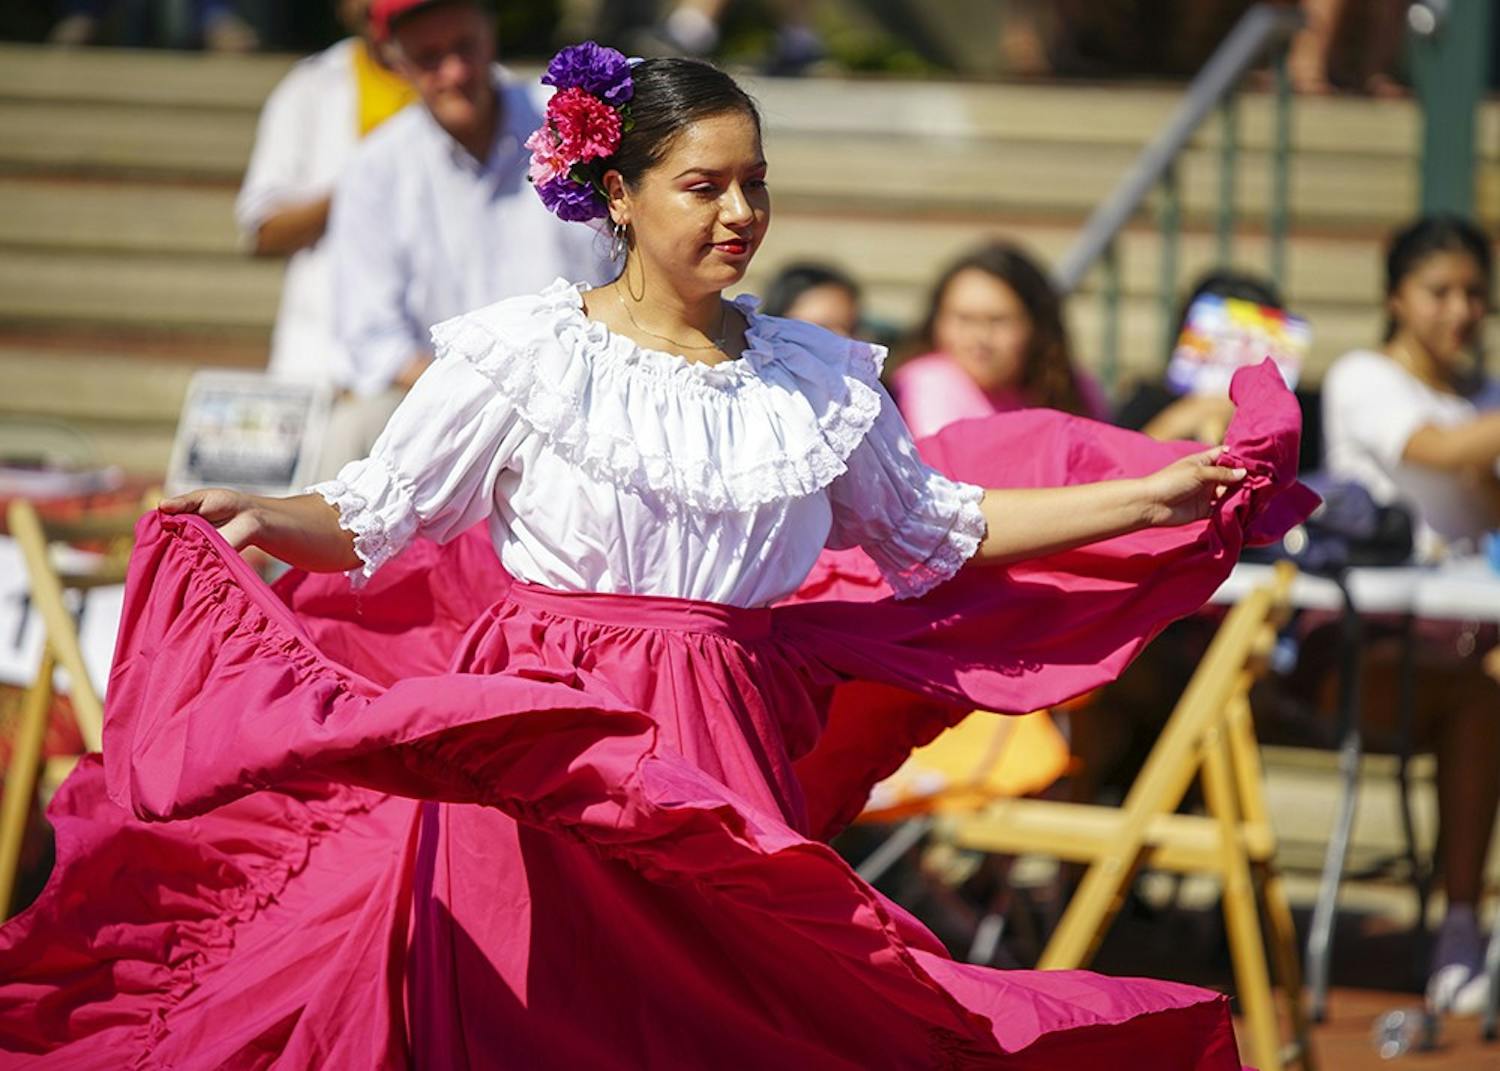 GALLERY: Fiesta in Showers City Hall Plaza kicks off National Hispanic Heritage Month